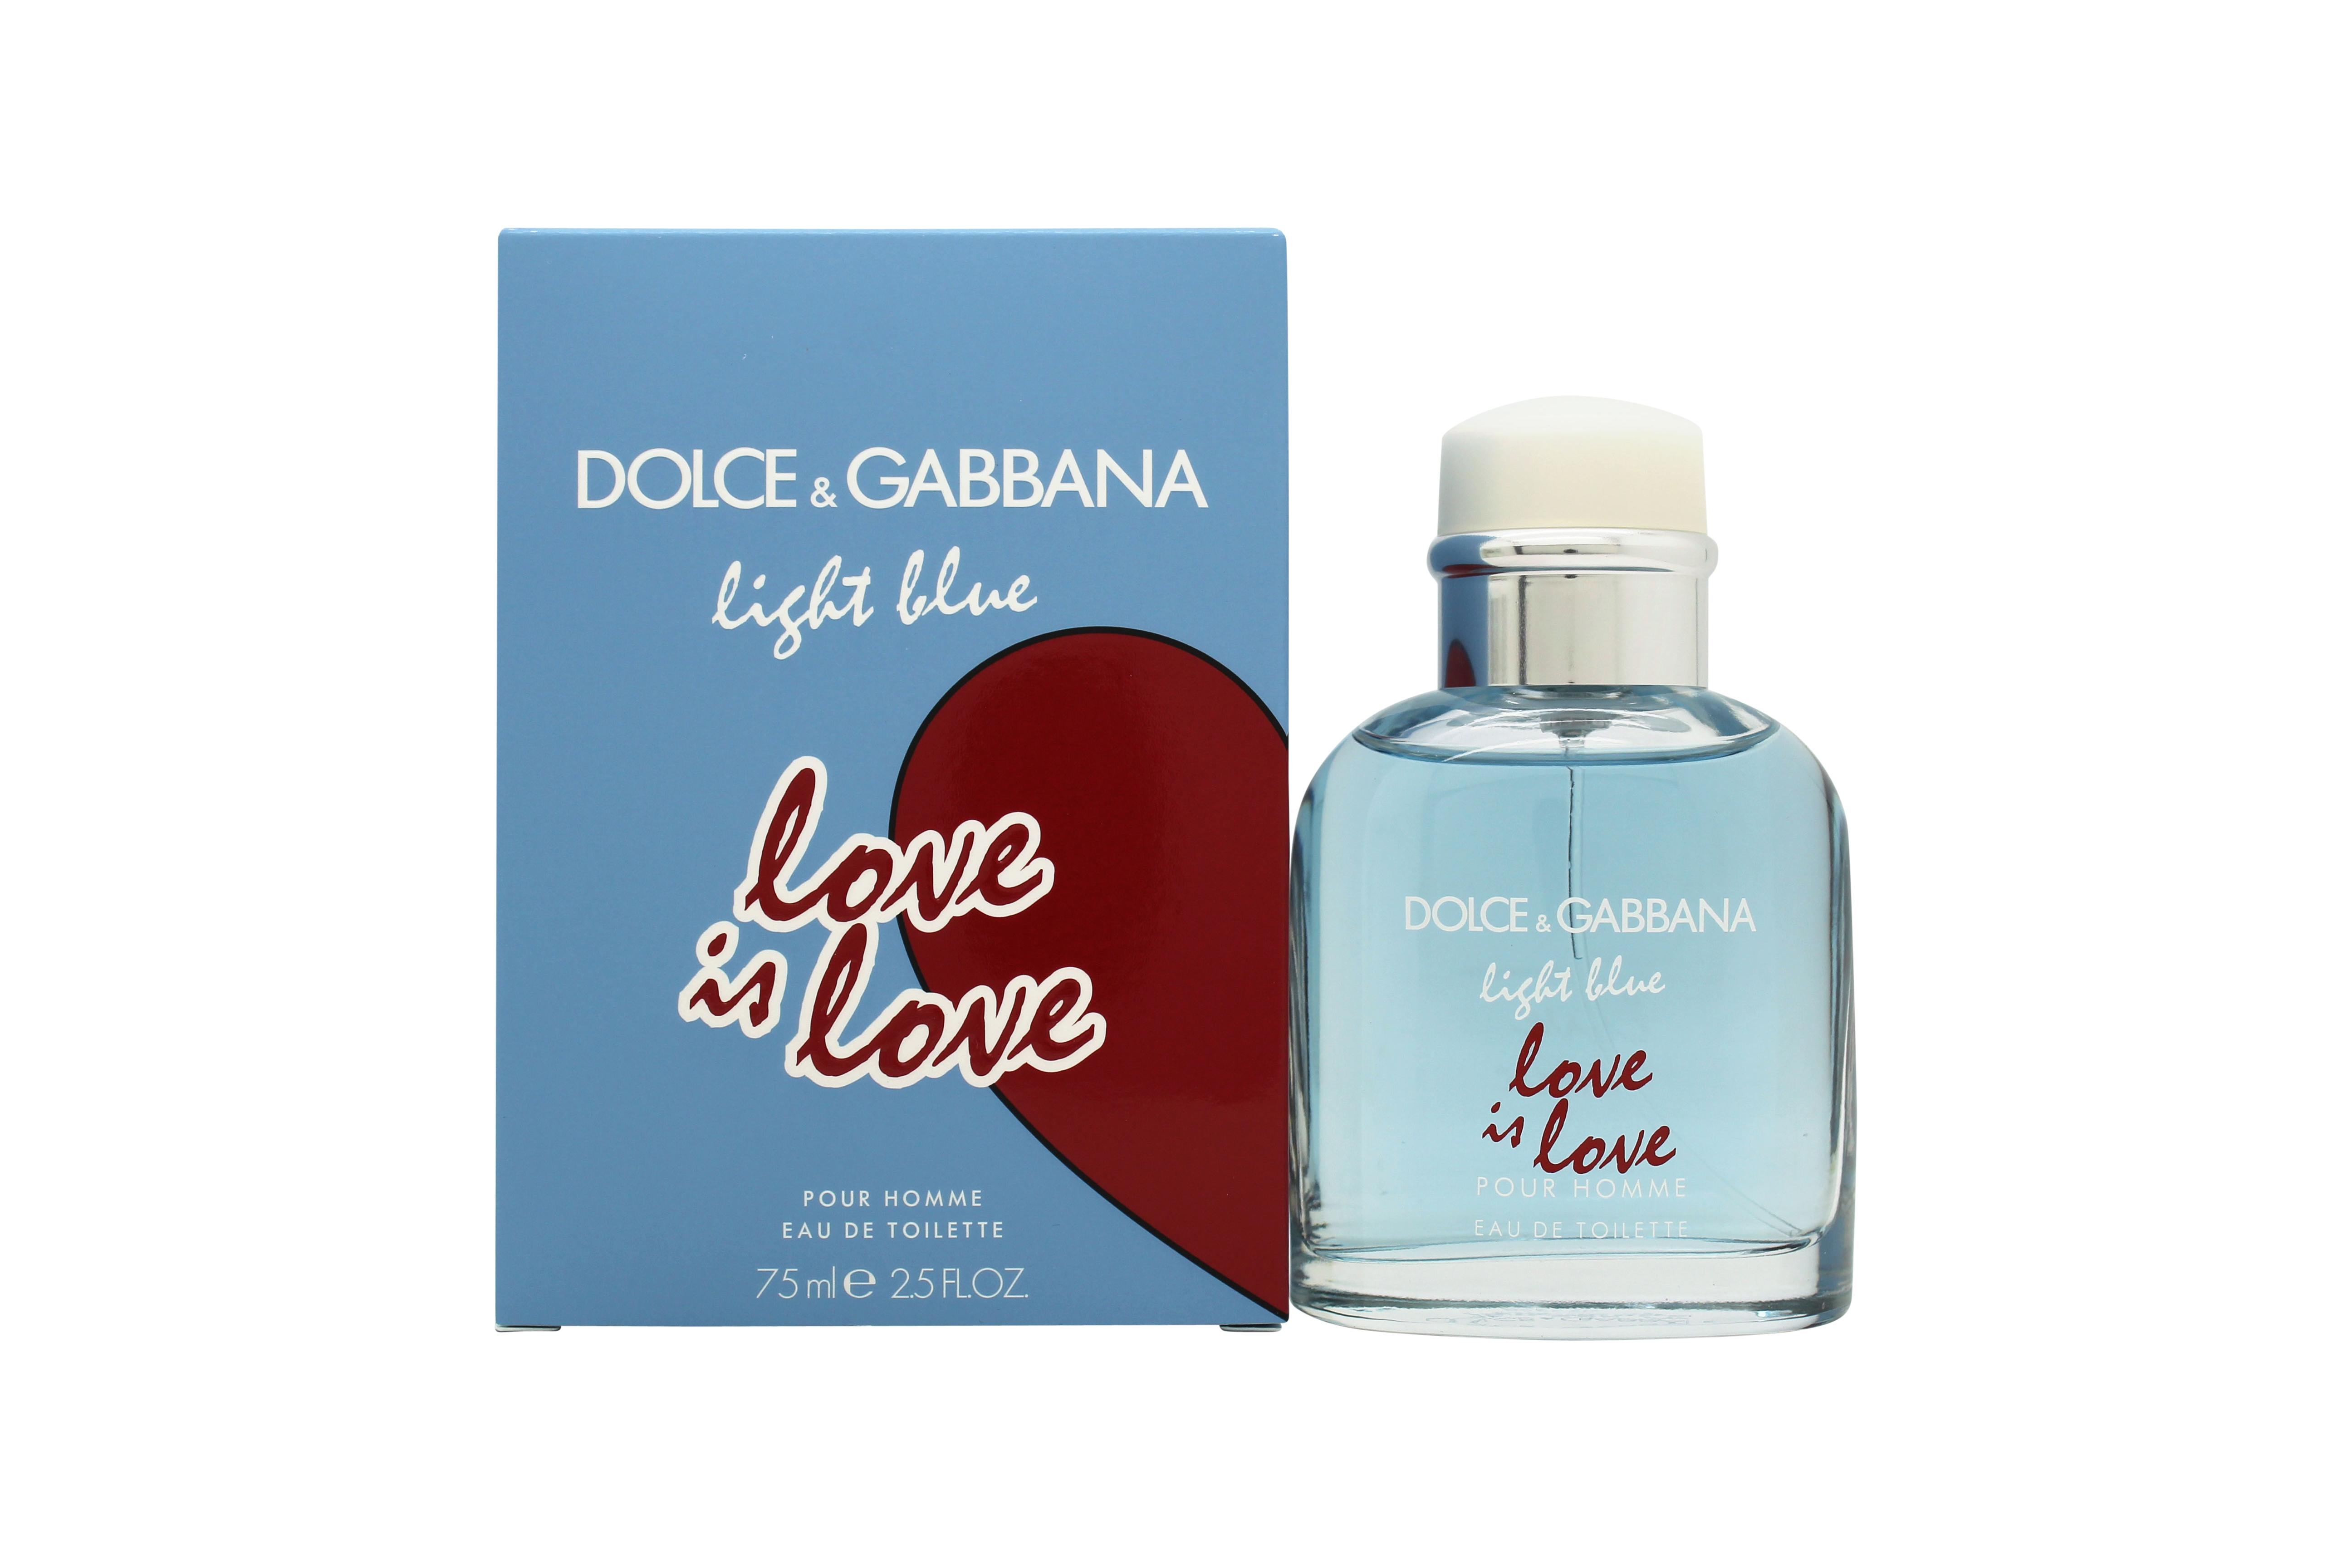 Dolce & Gabbana Light Blue Love is Love for Men Eau de Toilette 75ml Spray